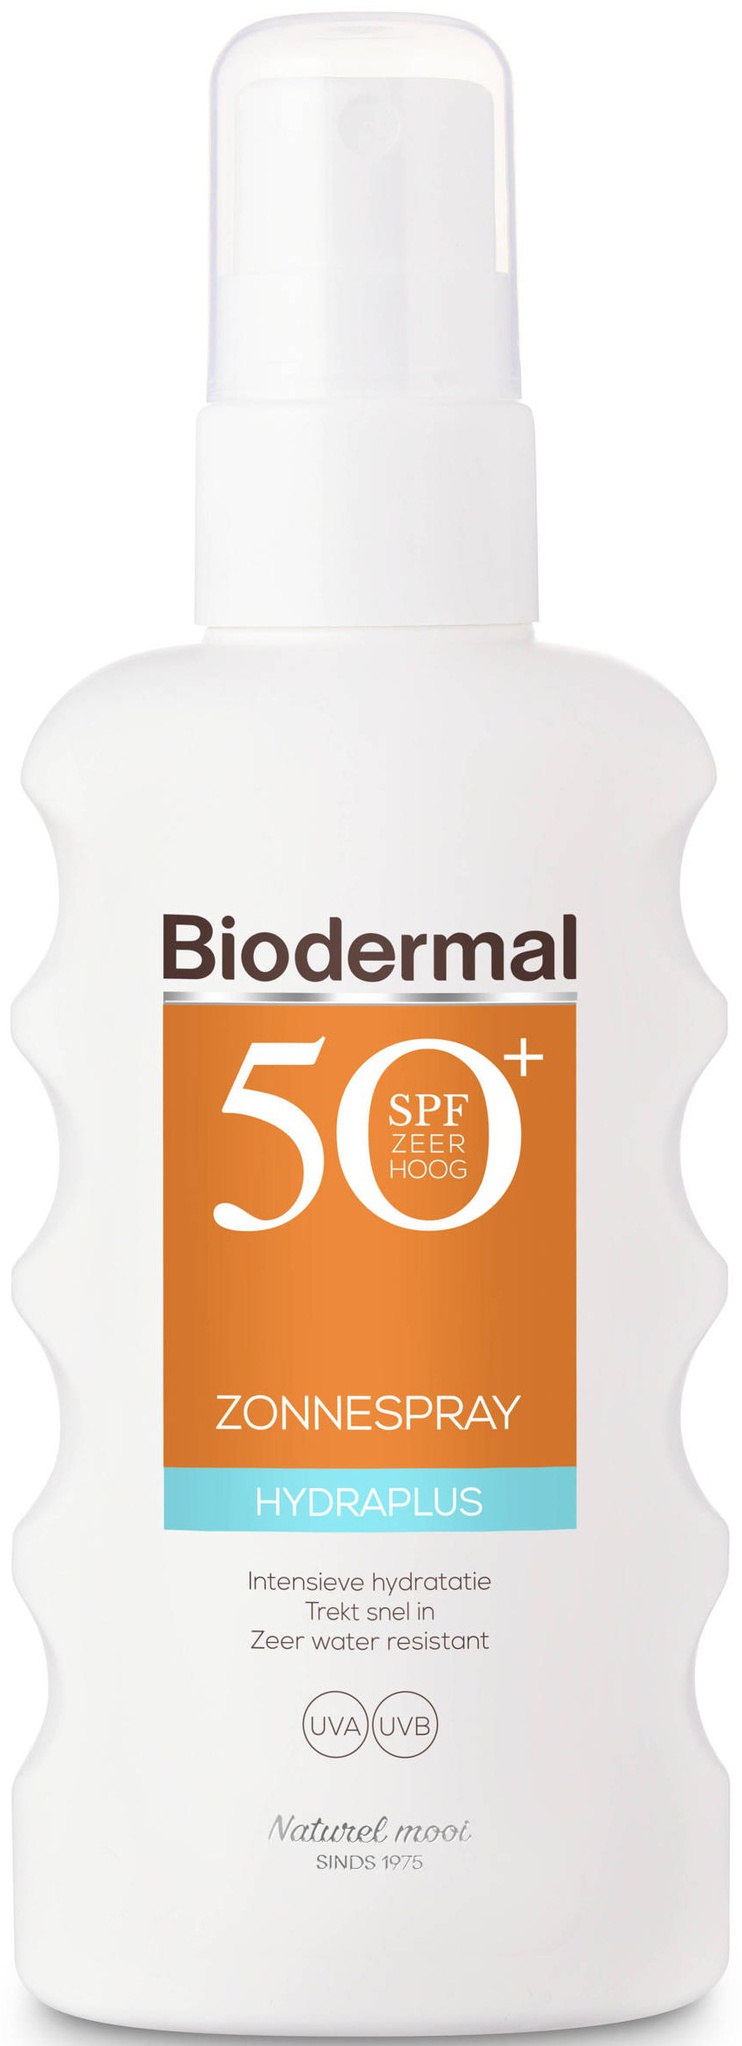 Biodermal Hydraplus Zonnespray SPF50+